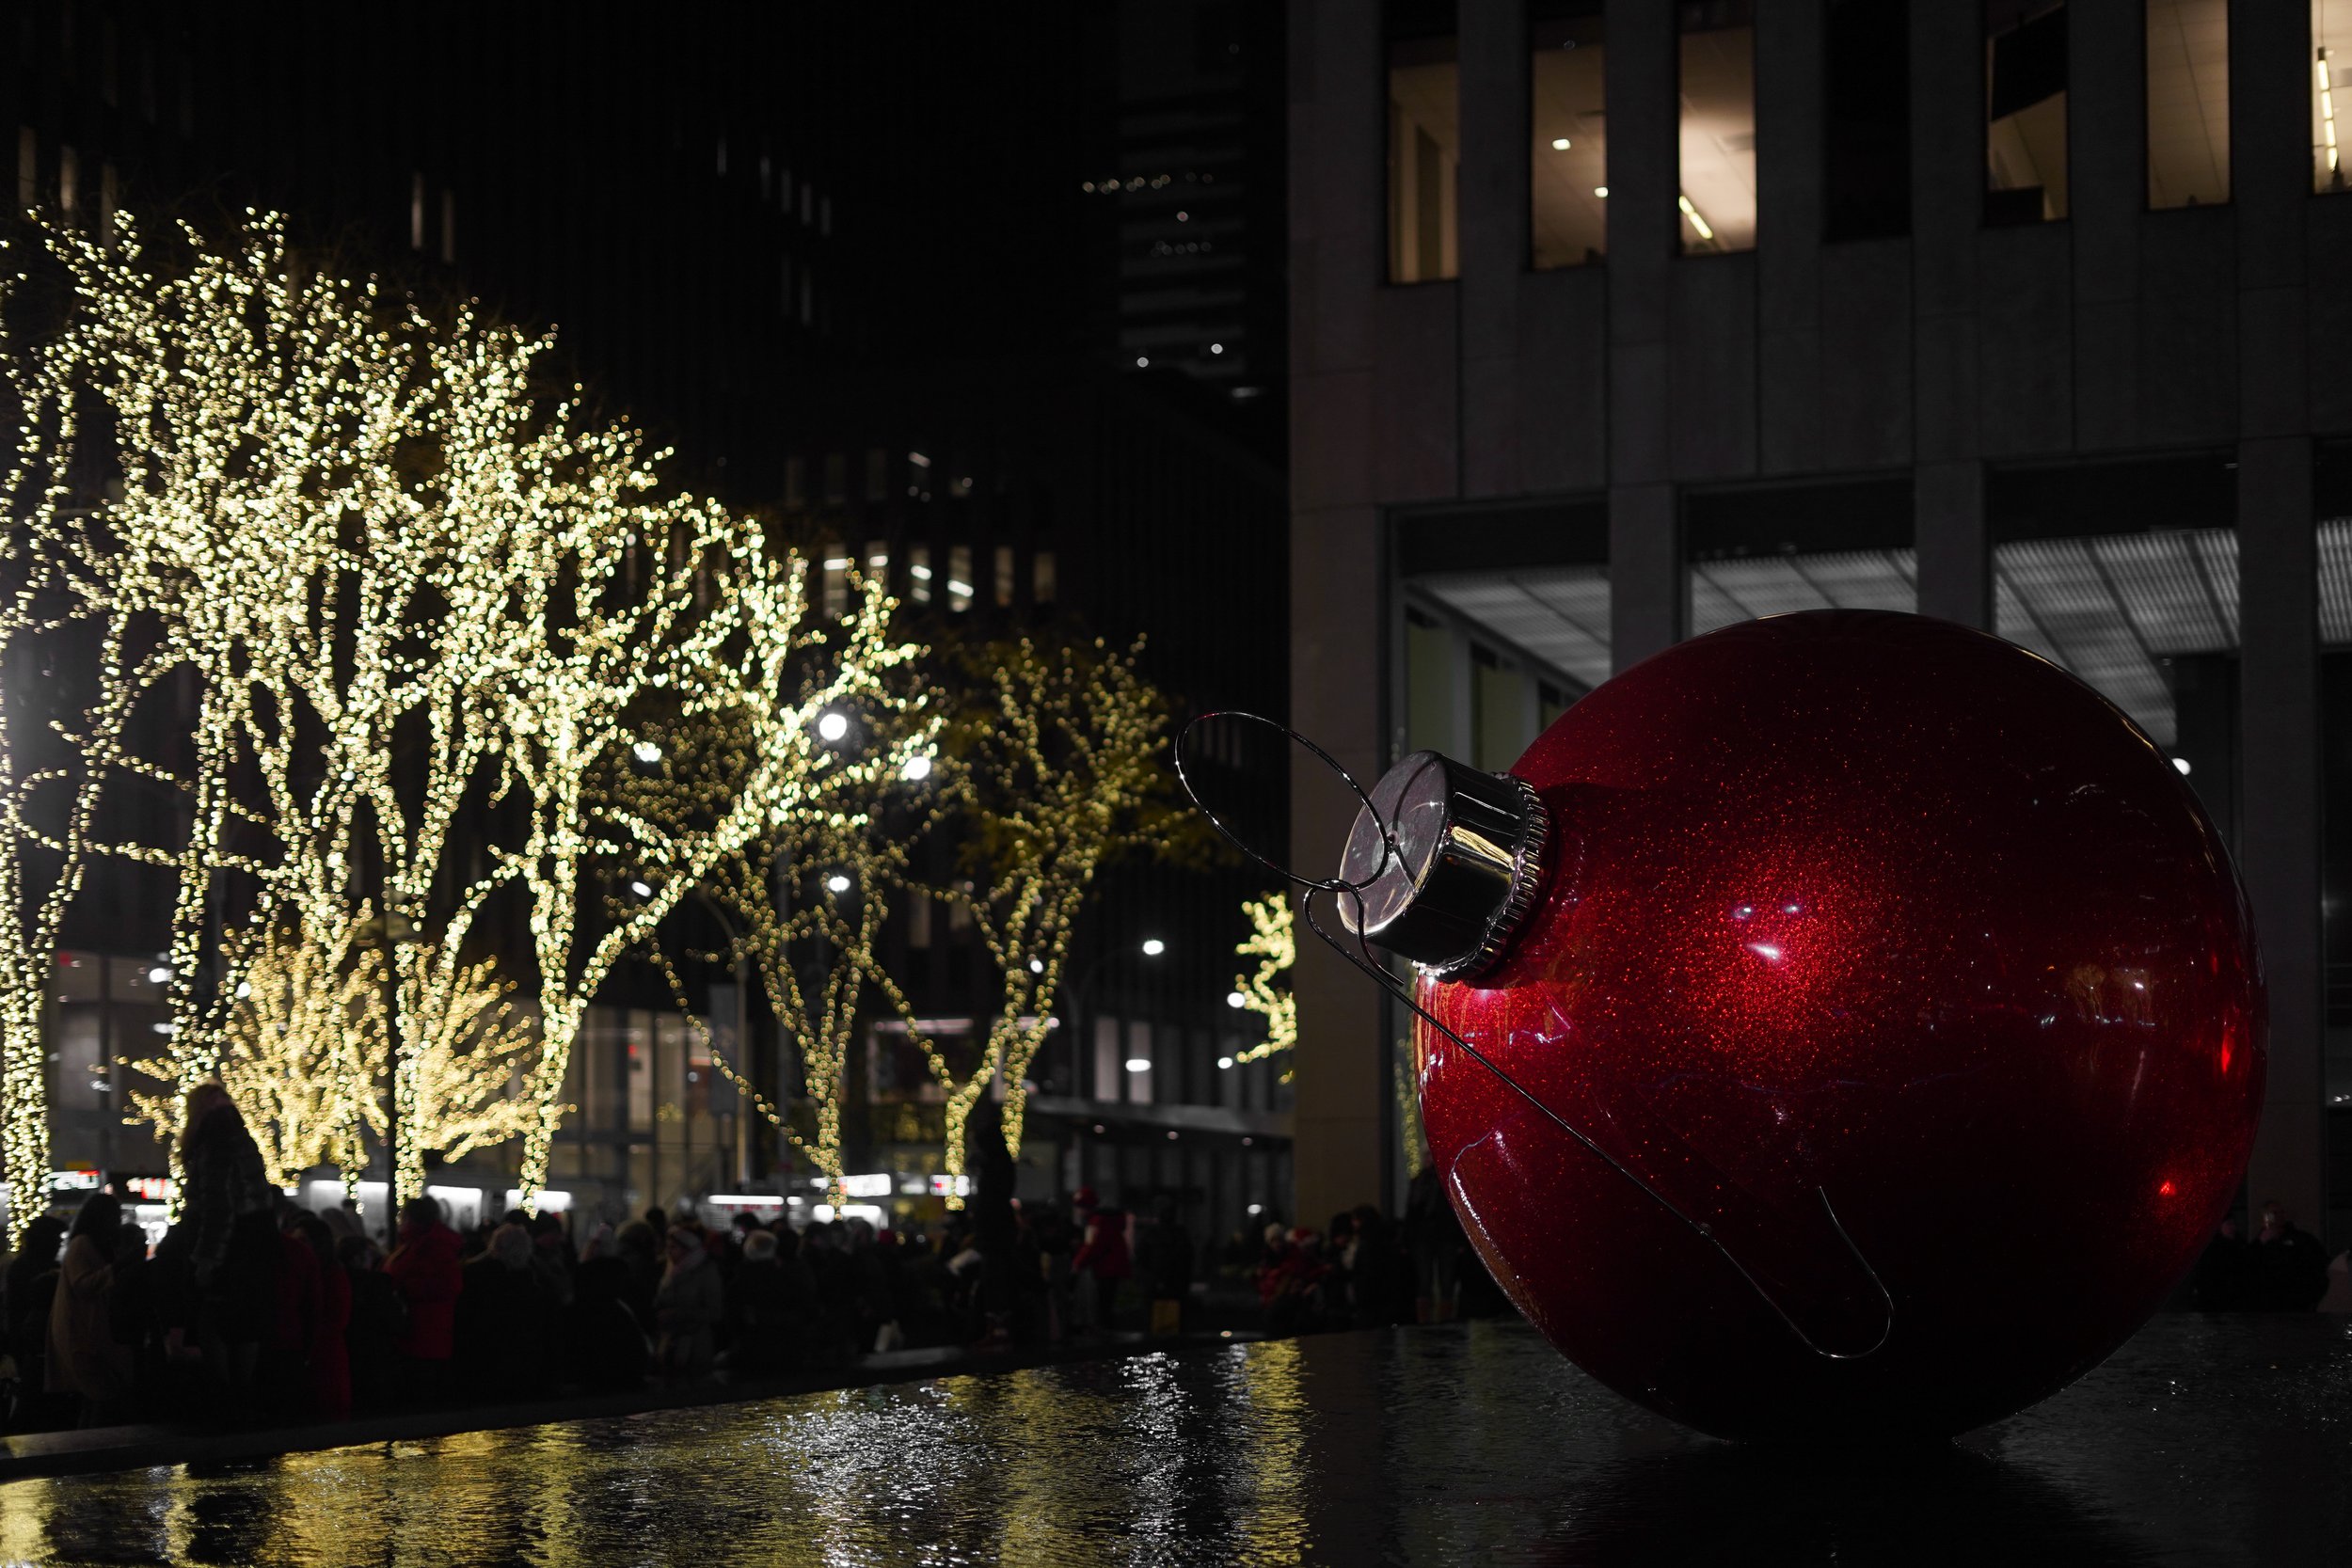 Big Apple in lights - NYC night tour